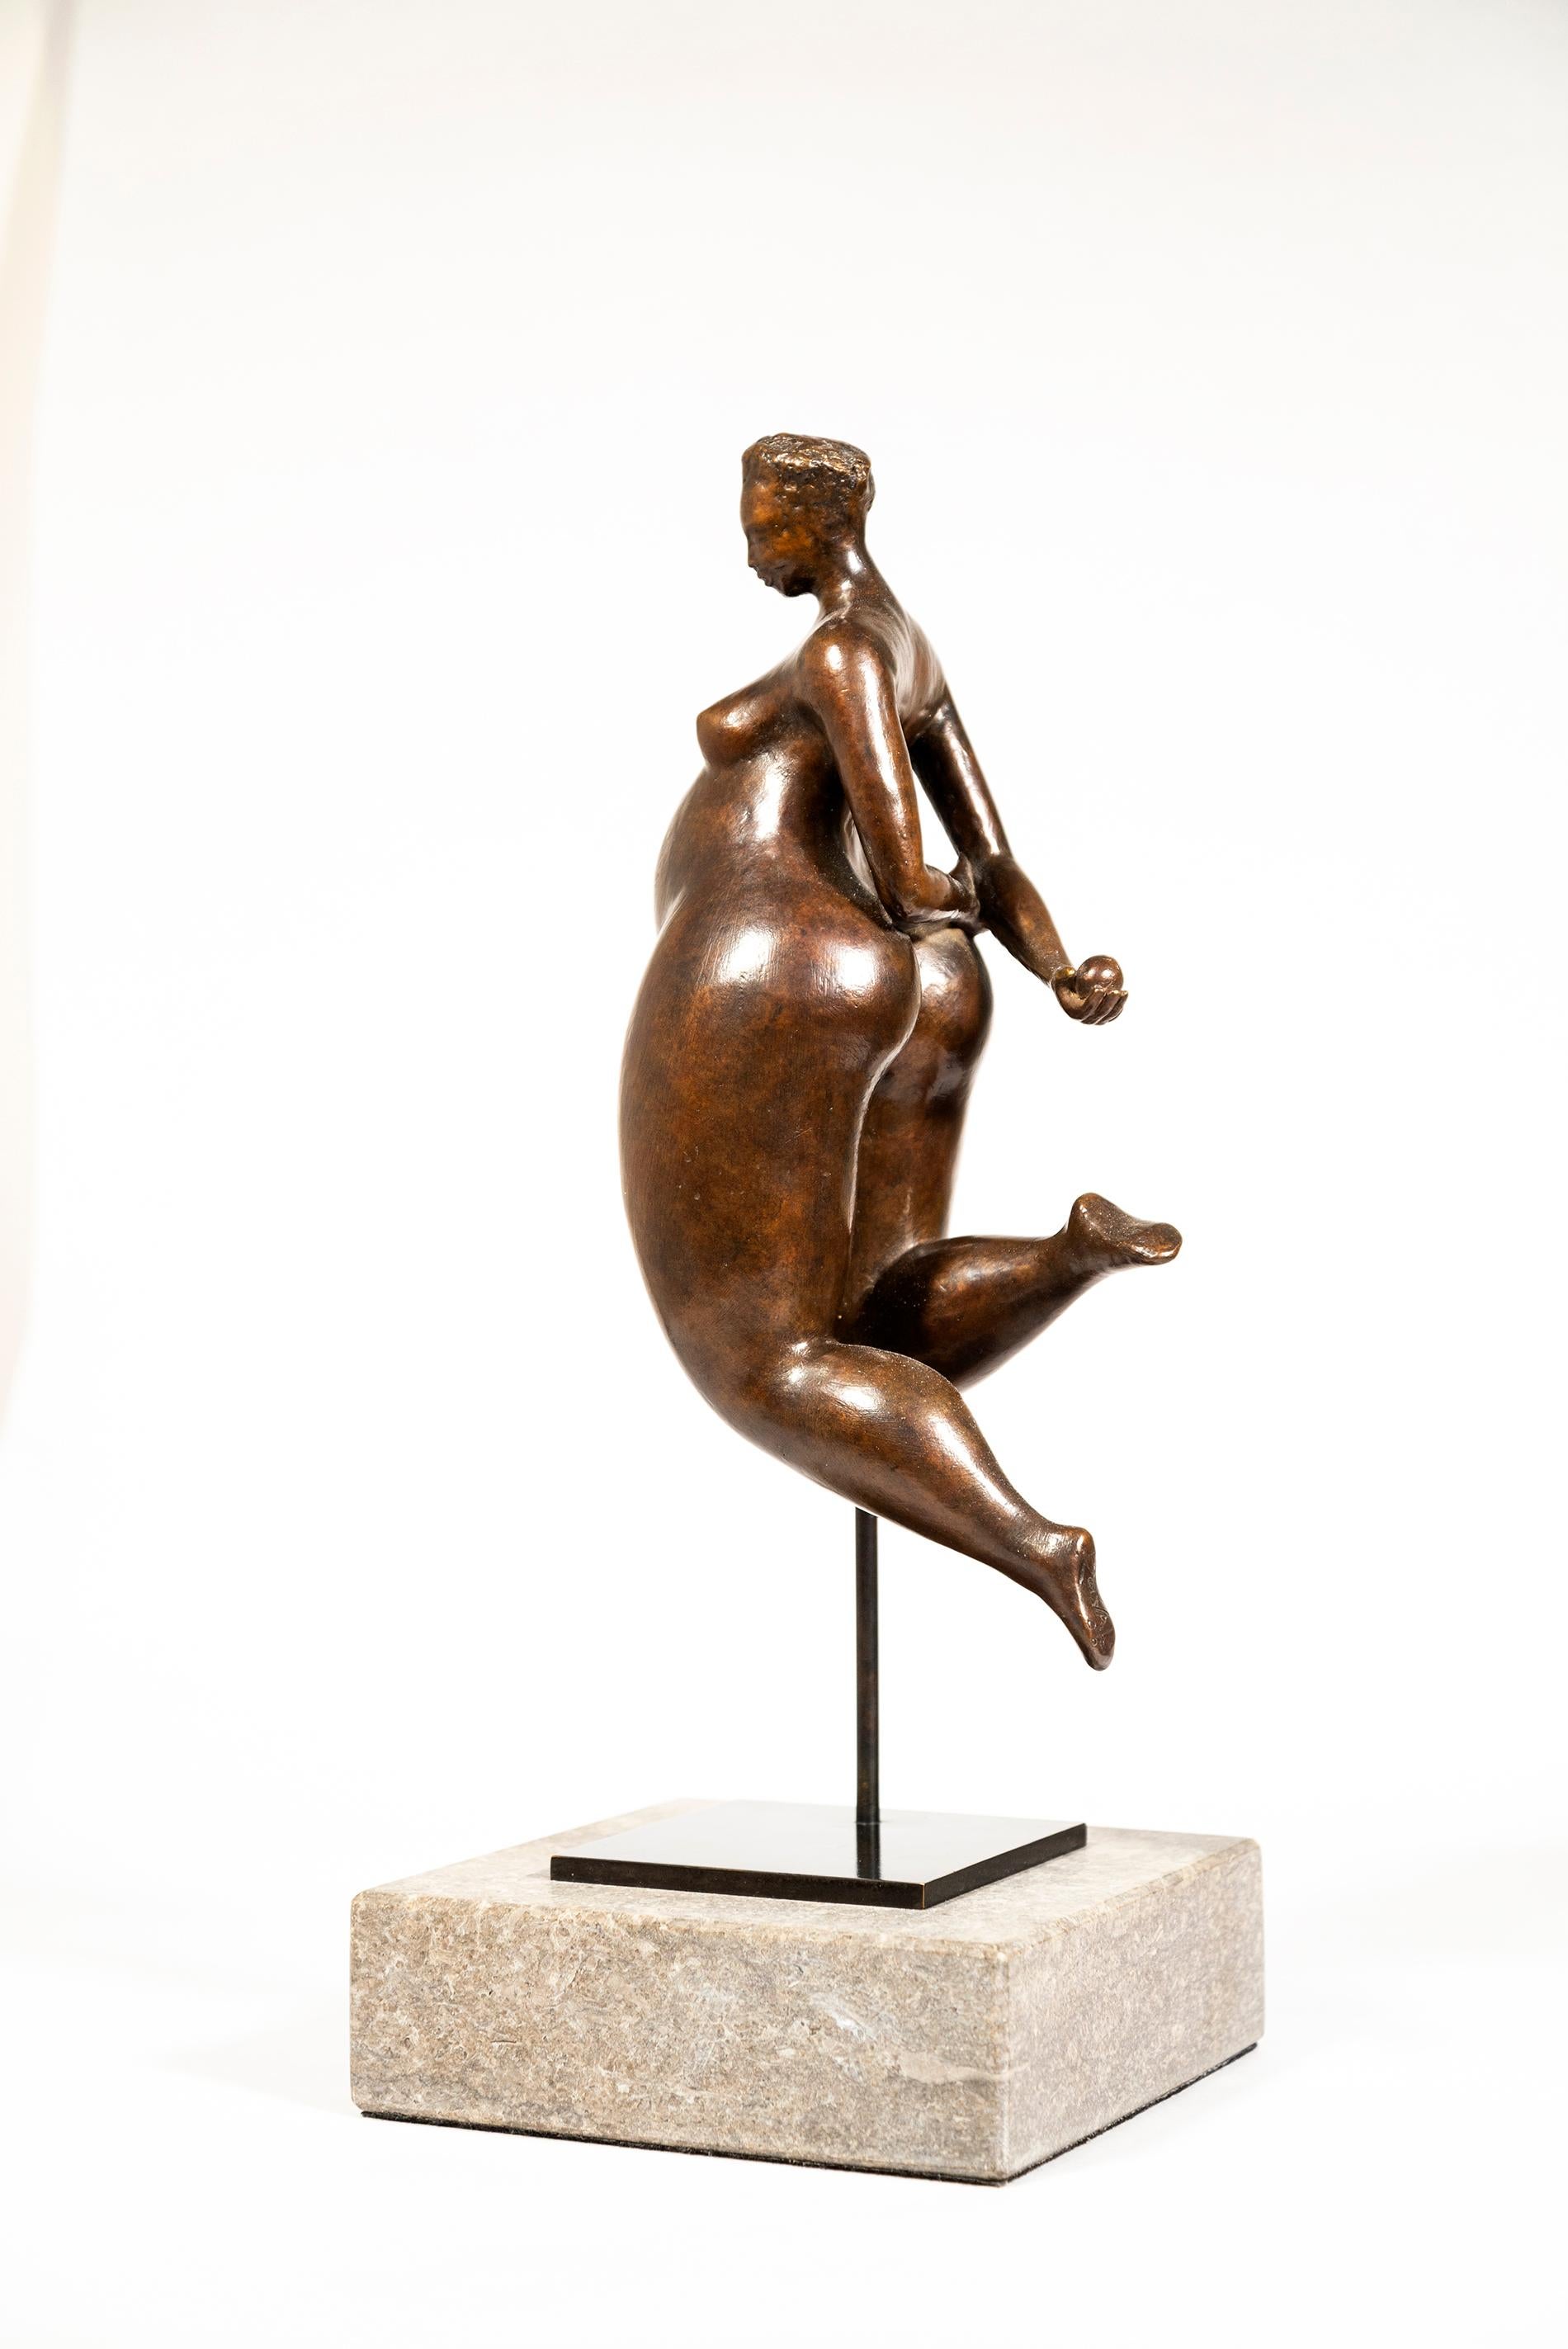 Zaliatou 3/8 - female, figurative, nude, expressive, modern, bronze sculpture For Sale 2